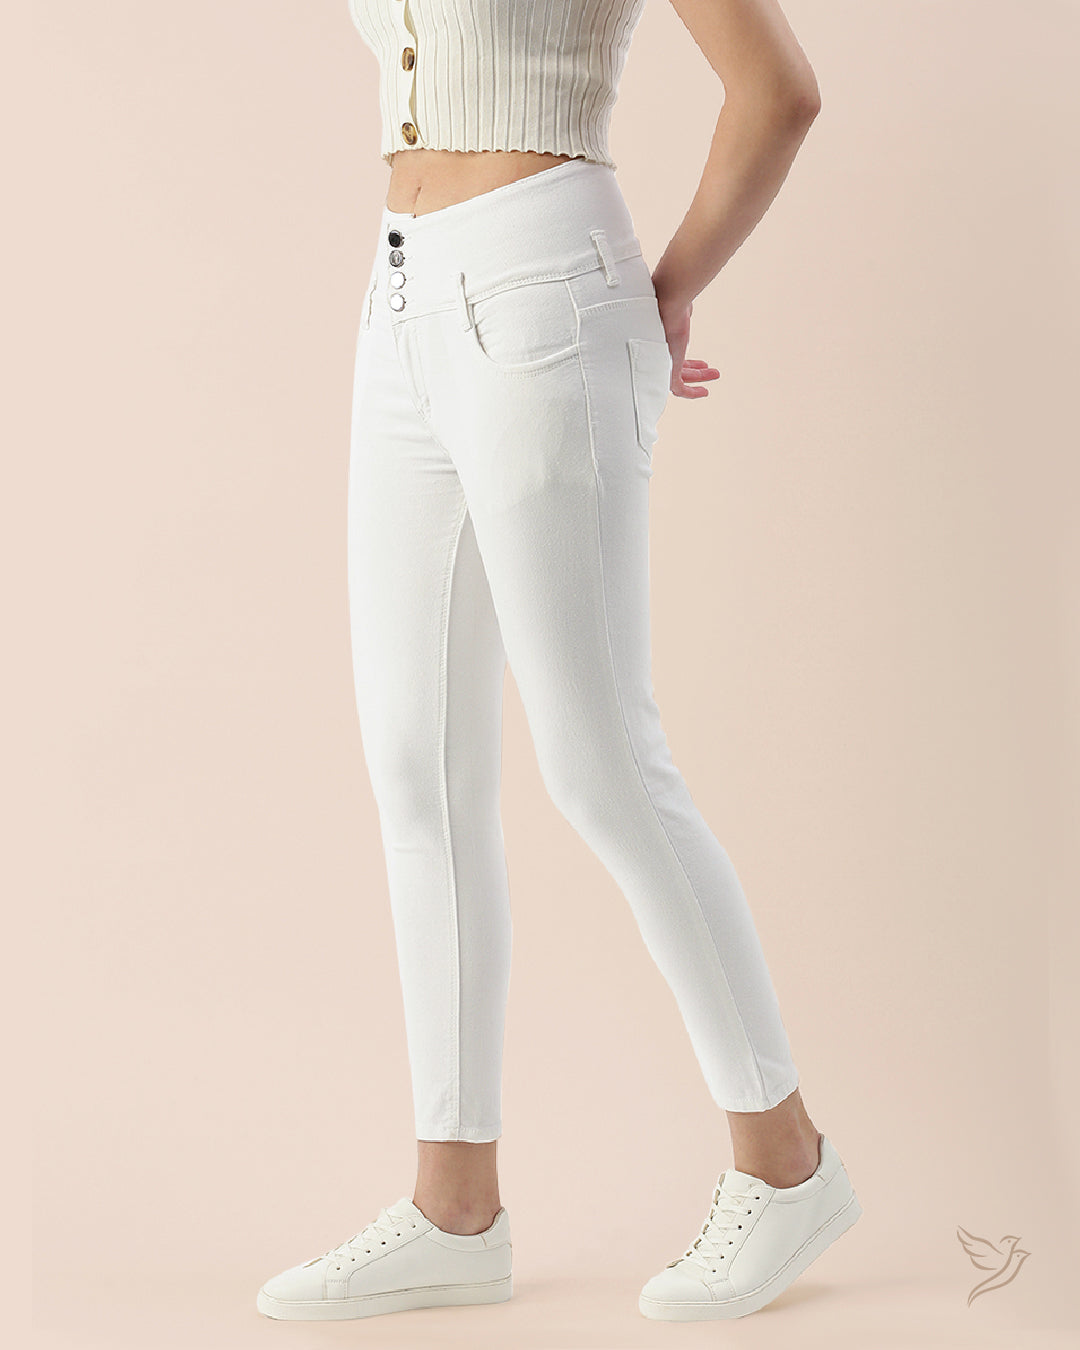 Pearl White High Waist Denim Jeans for Women